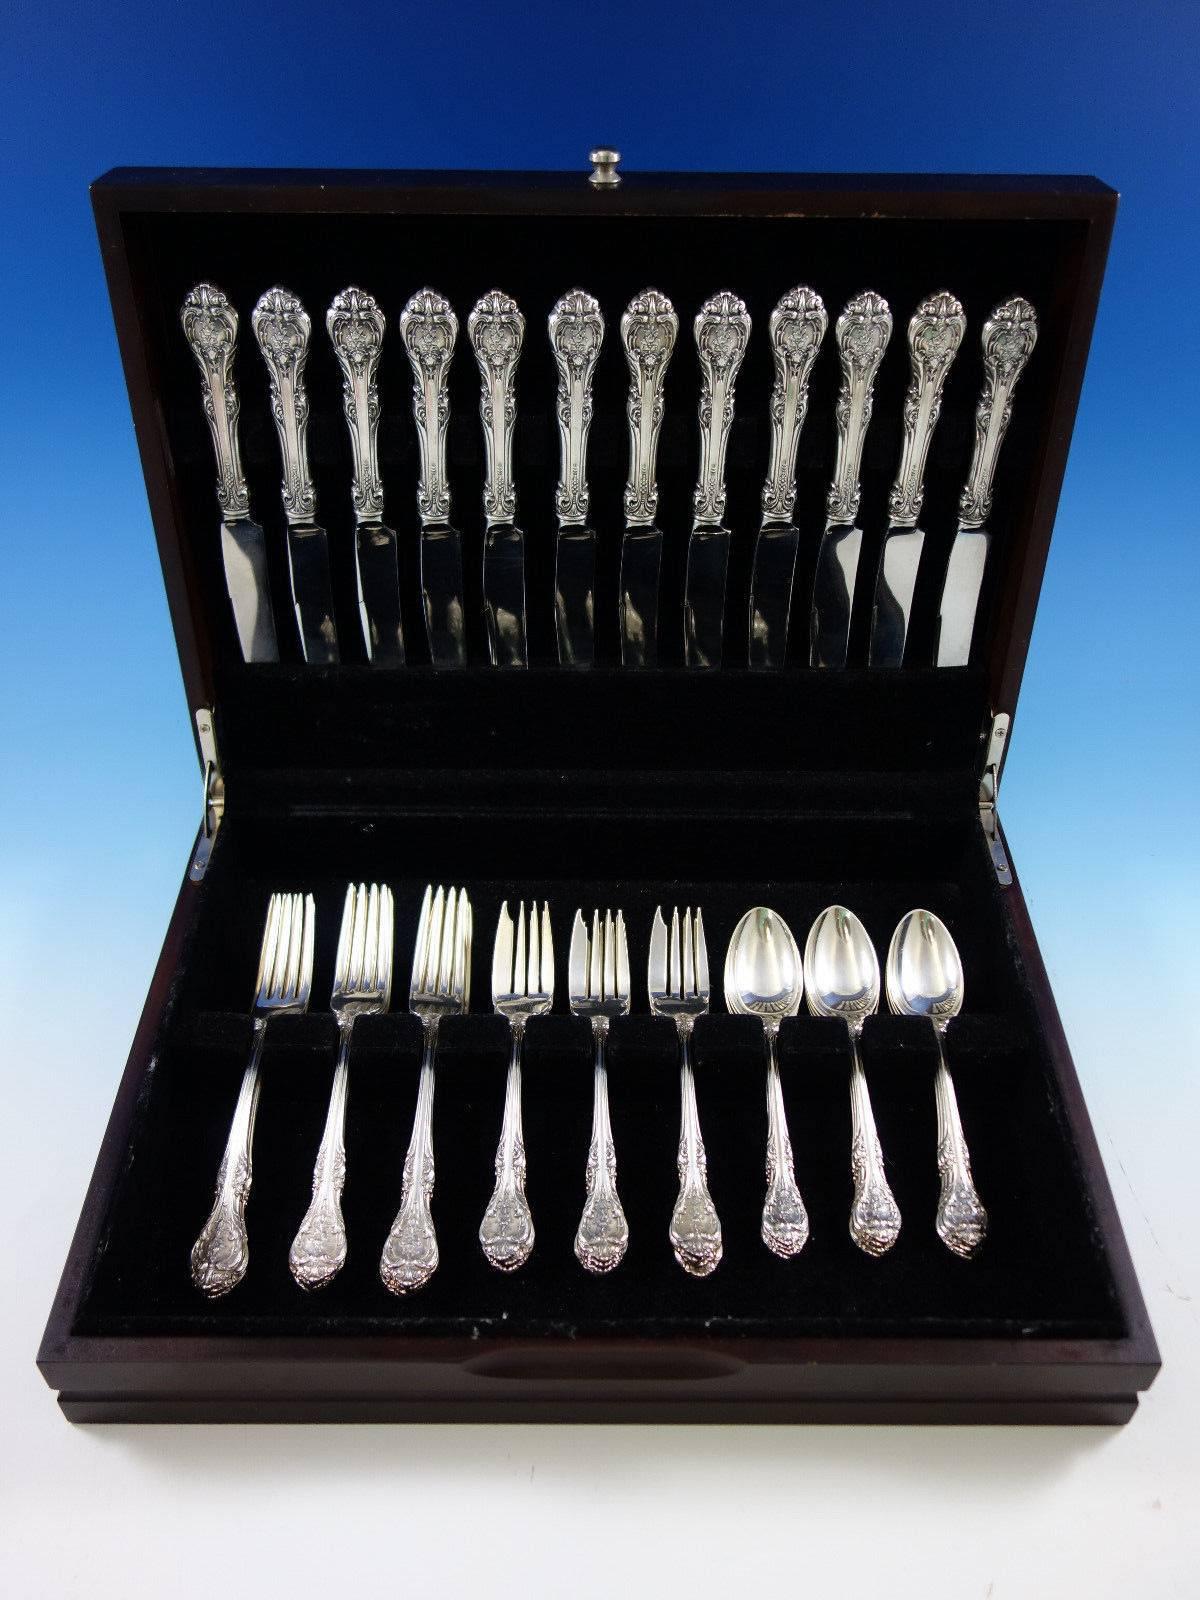 King Edward by Gorham sterling silver flatware set includes:

12 knives, 8 7/8